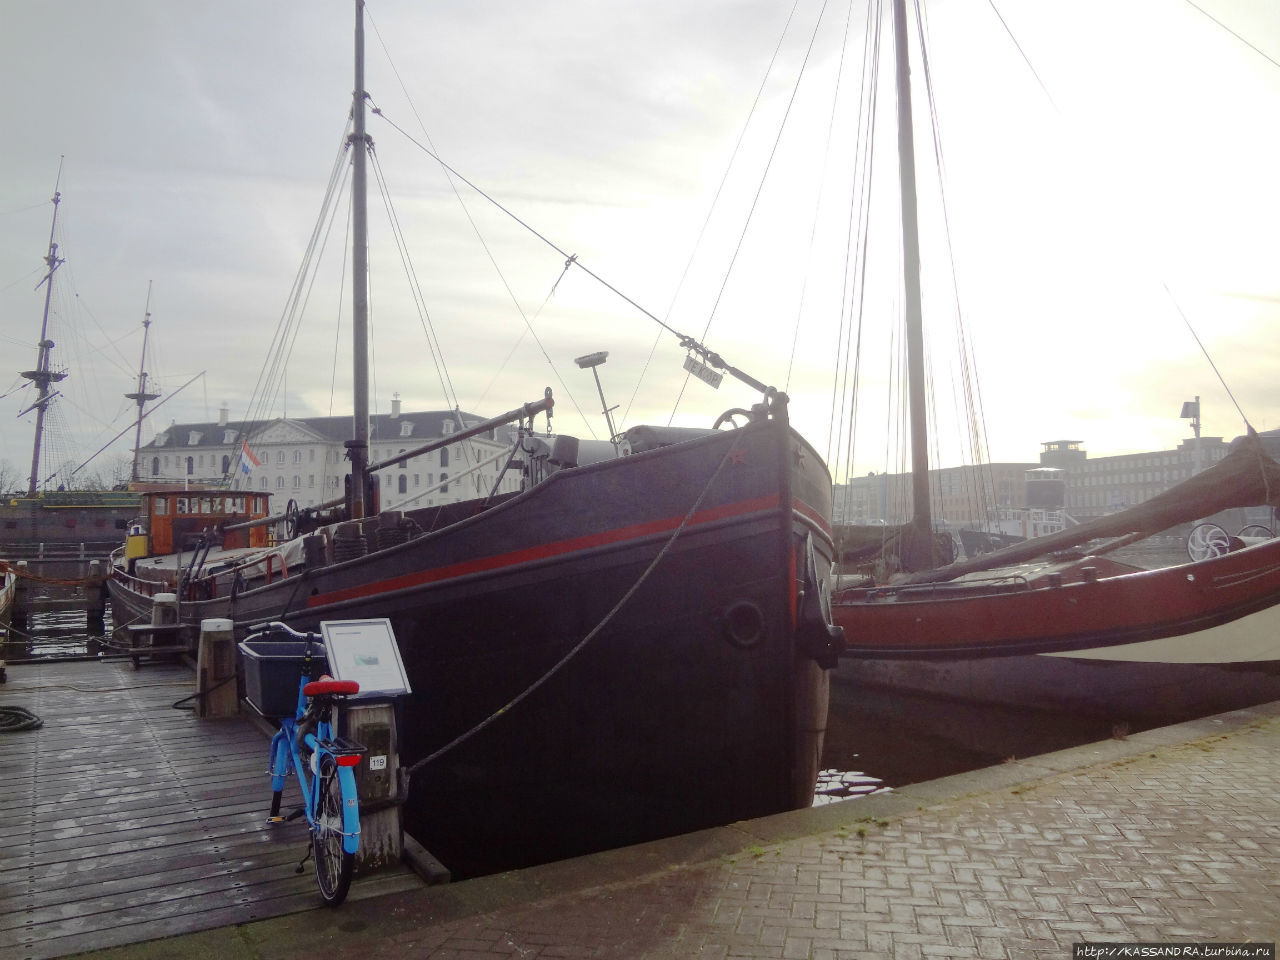 Ауде-Зёйде в Амстердаме. Корабли в моей гавани Амстердам, Нидерланды